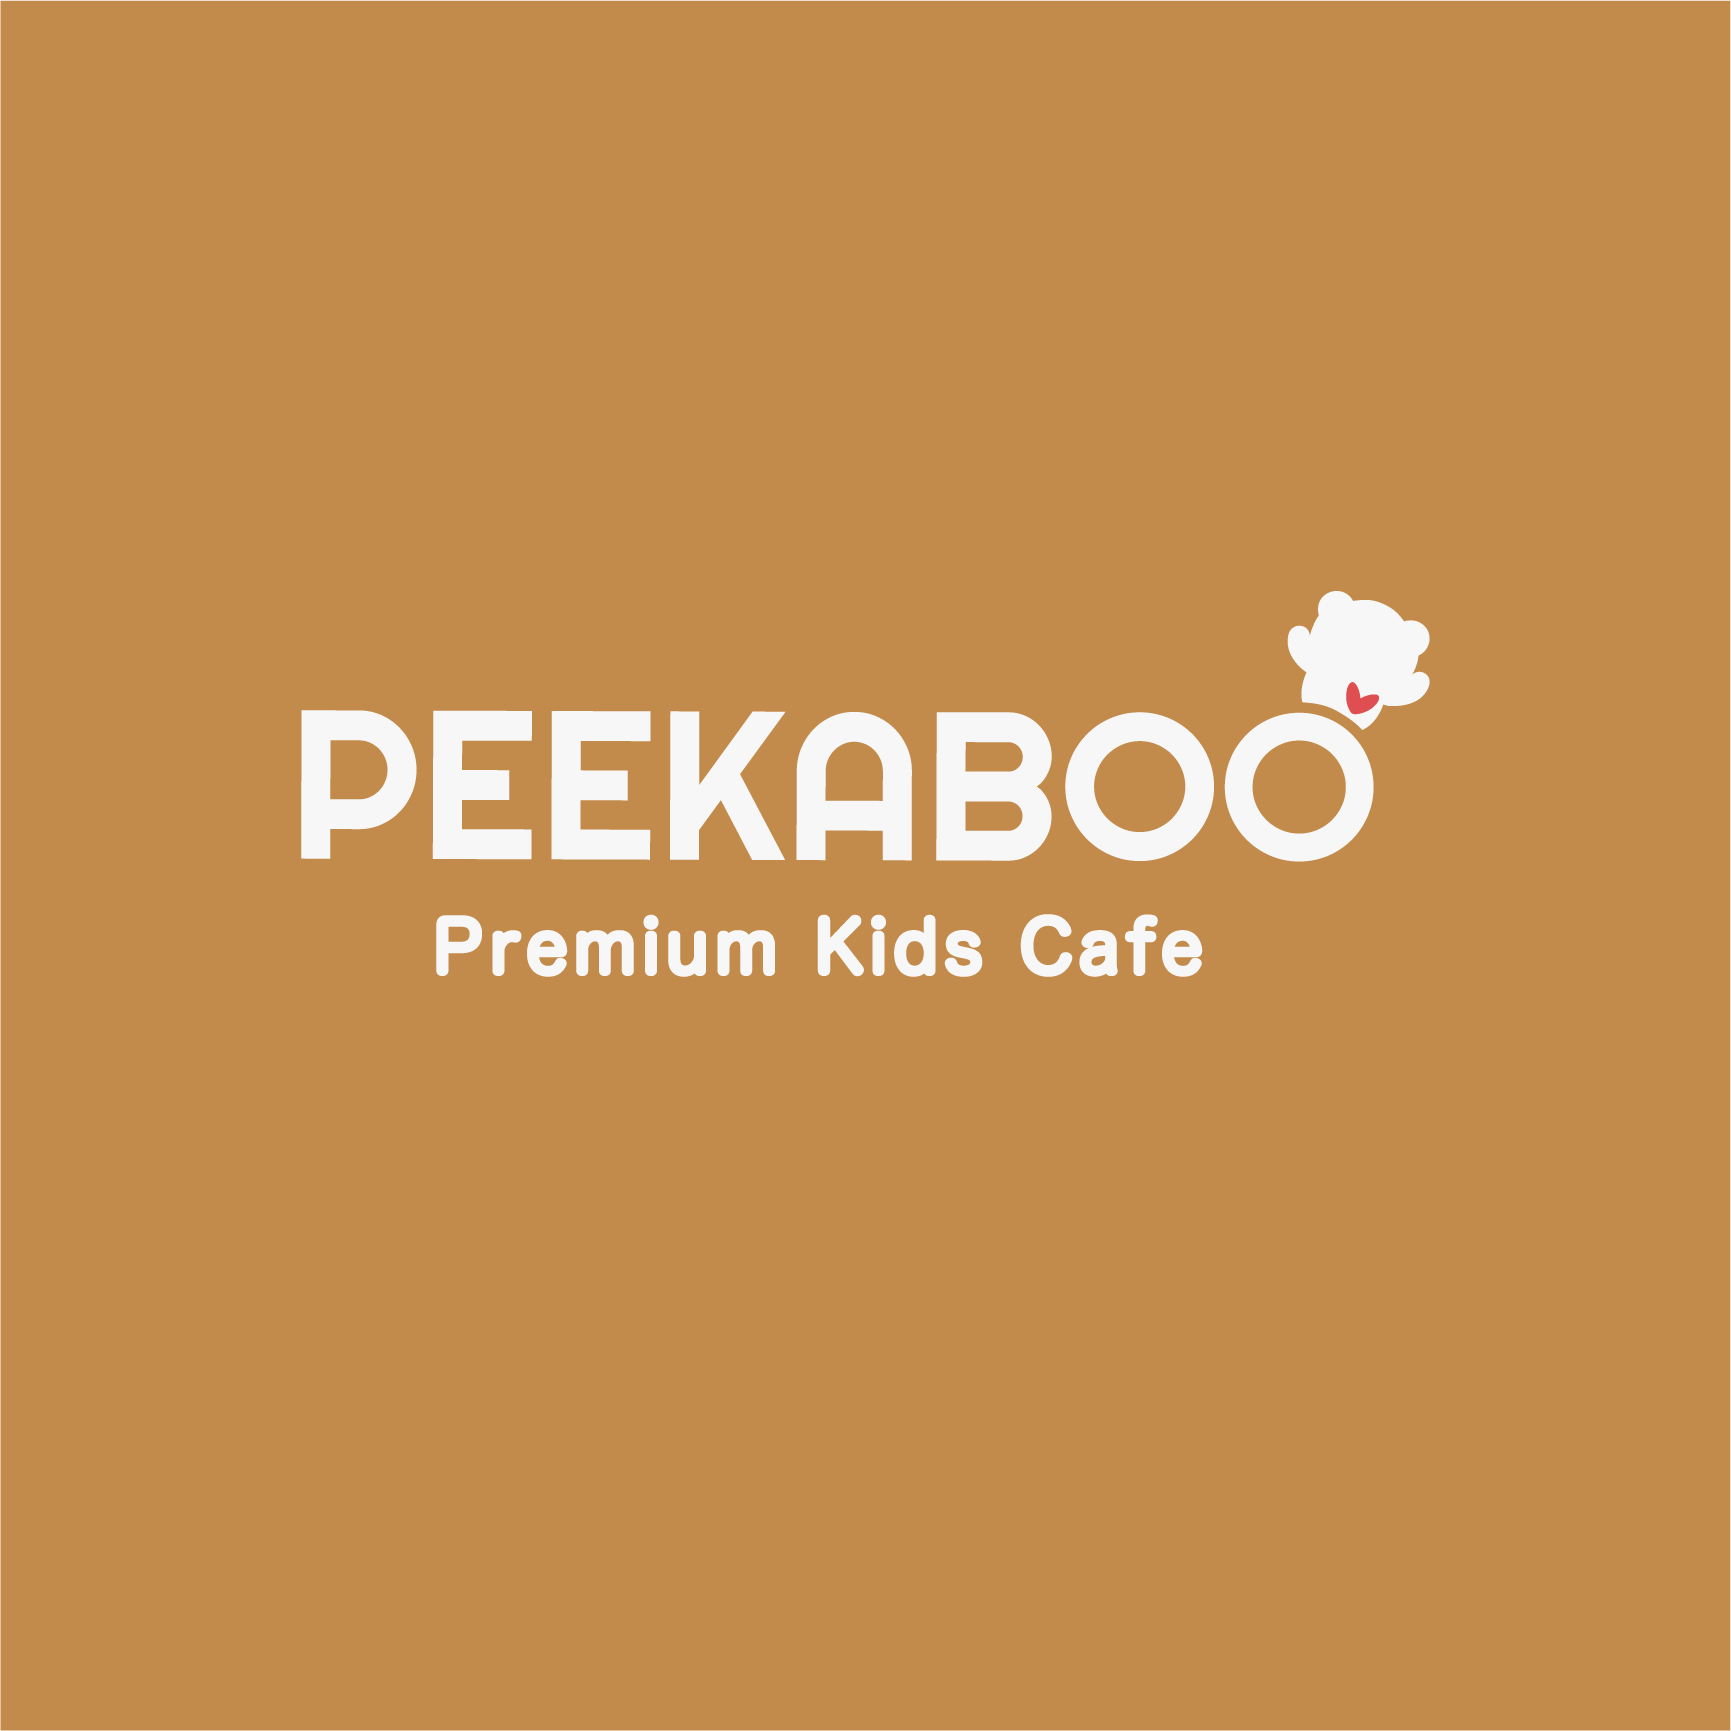 PEEKABOO PREMIUM KIDS CAFE